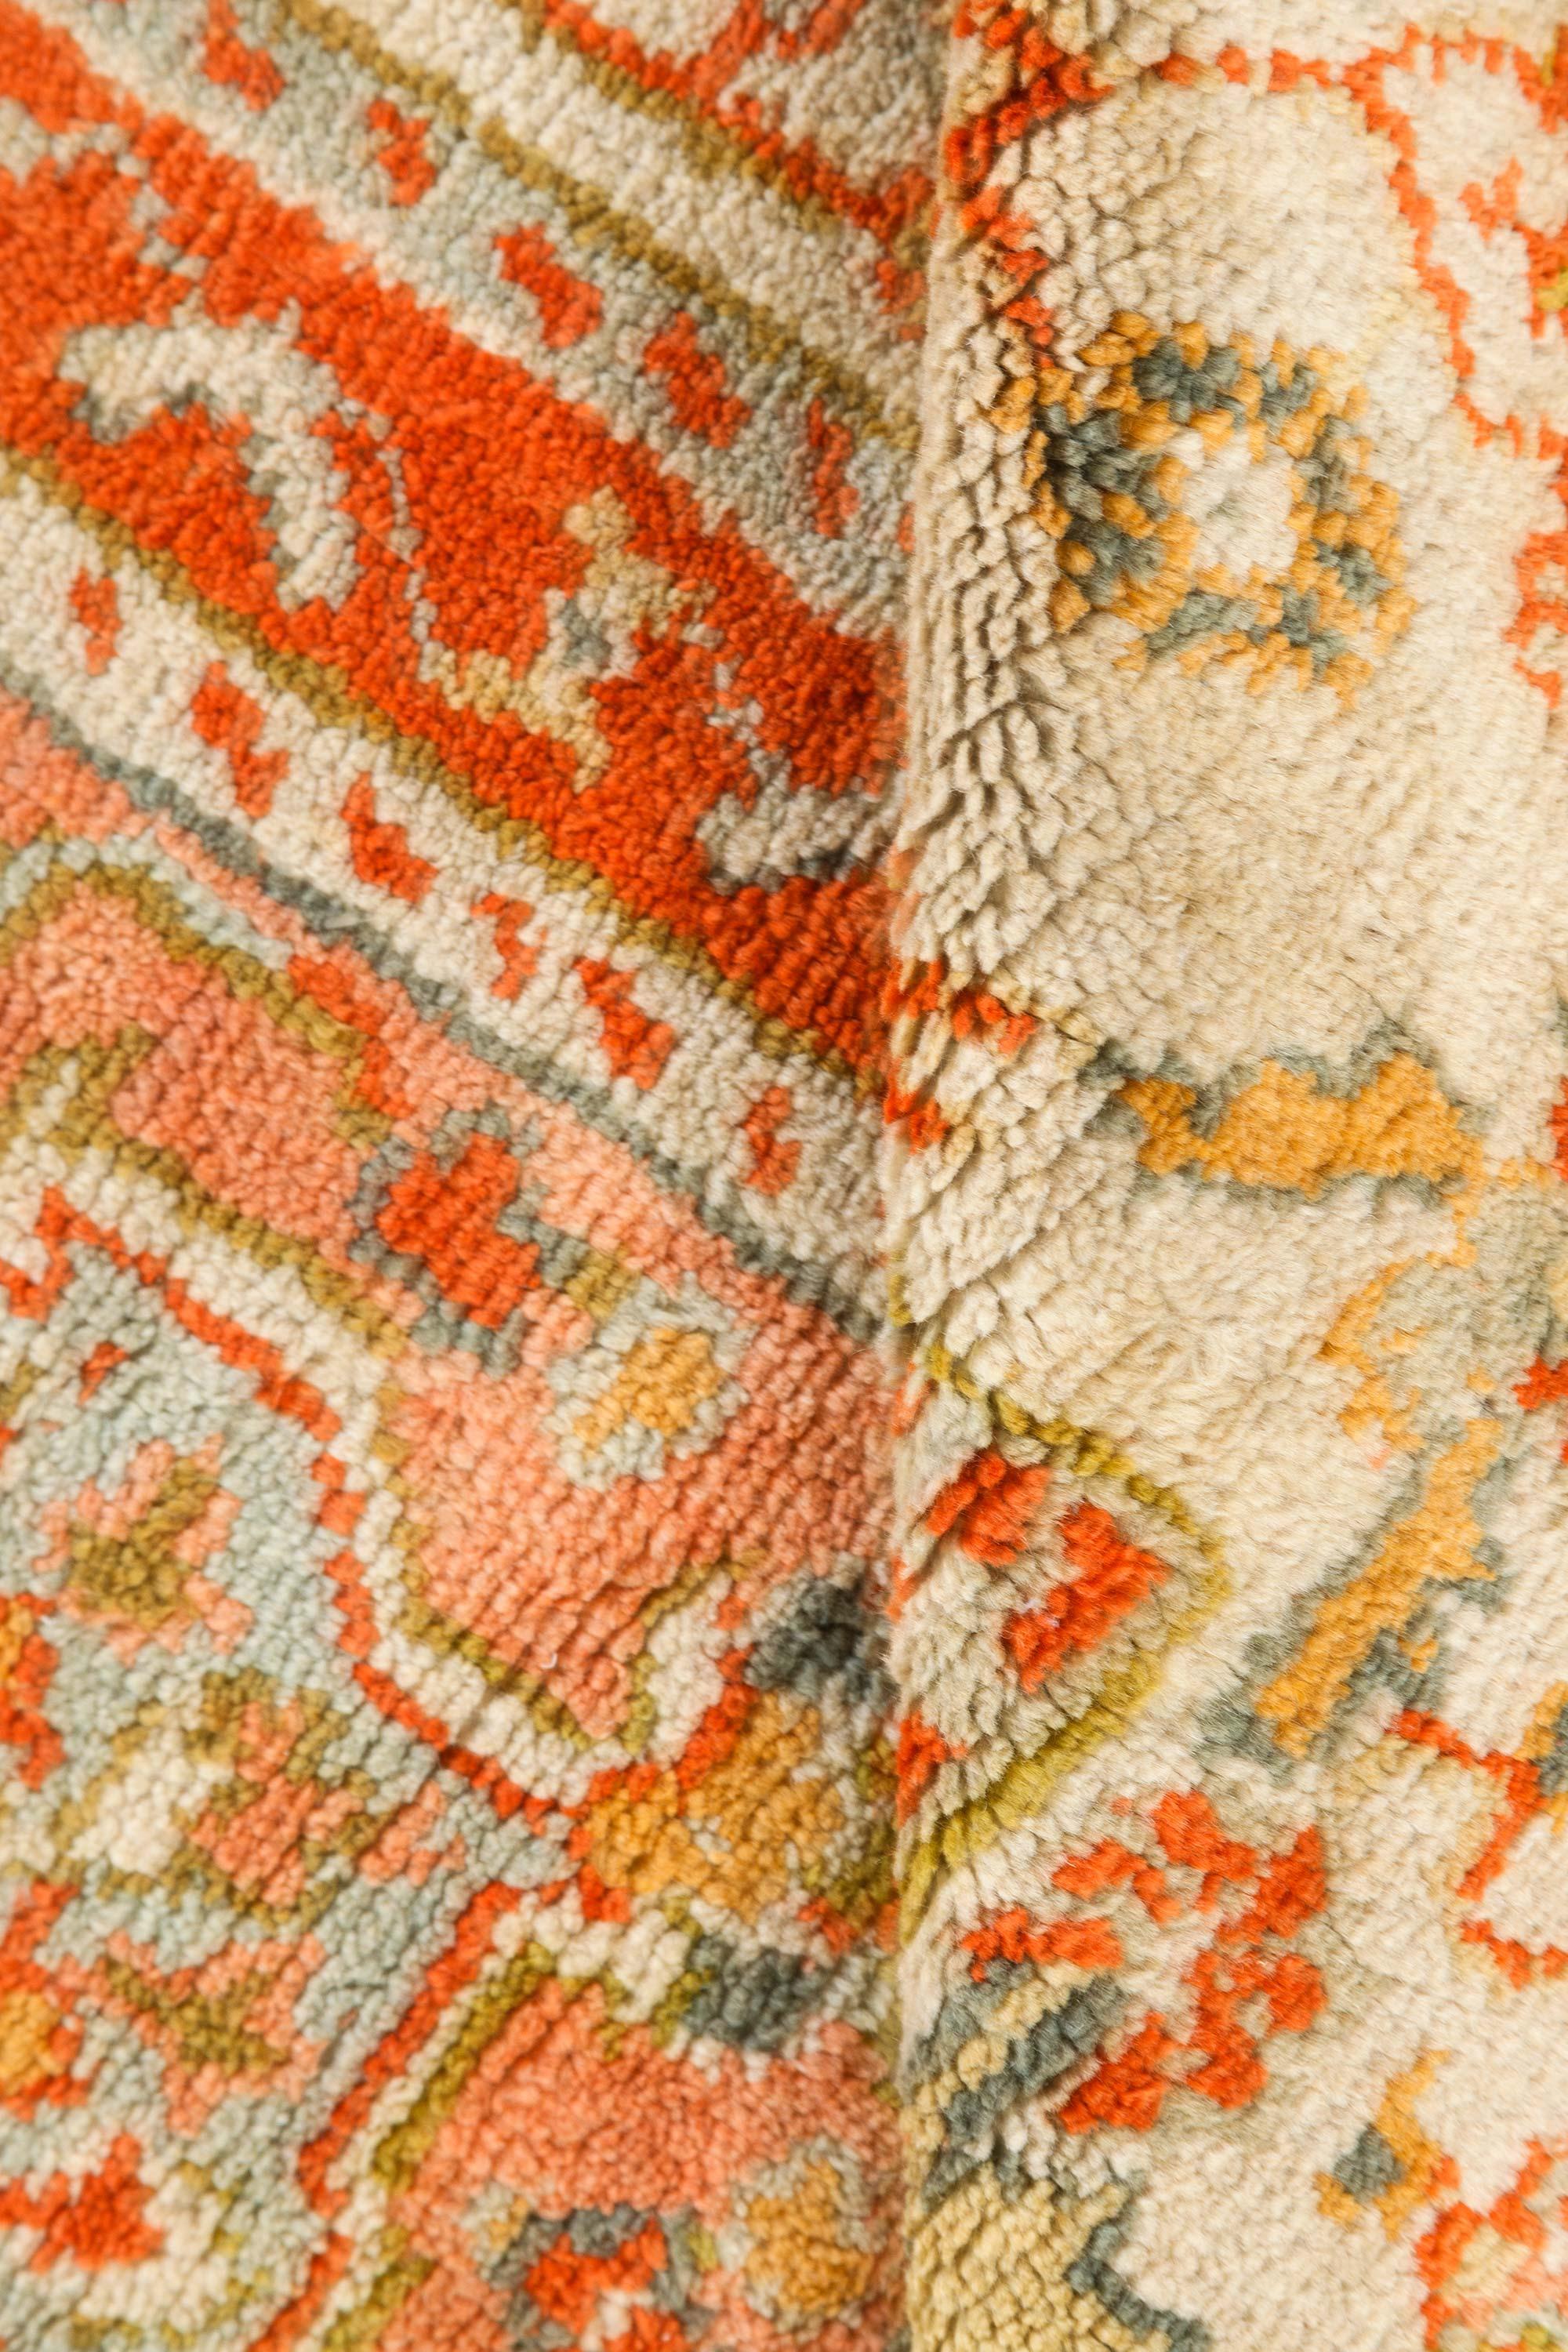 Antique Turkish Oushak botanic handmade wool carpet
Size: 10'8